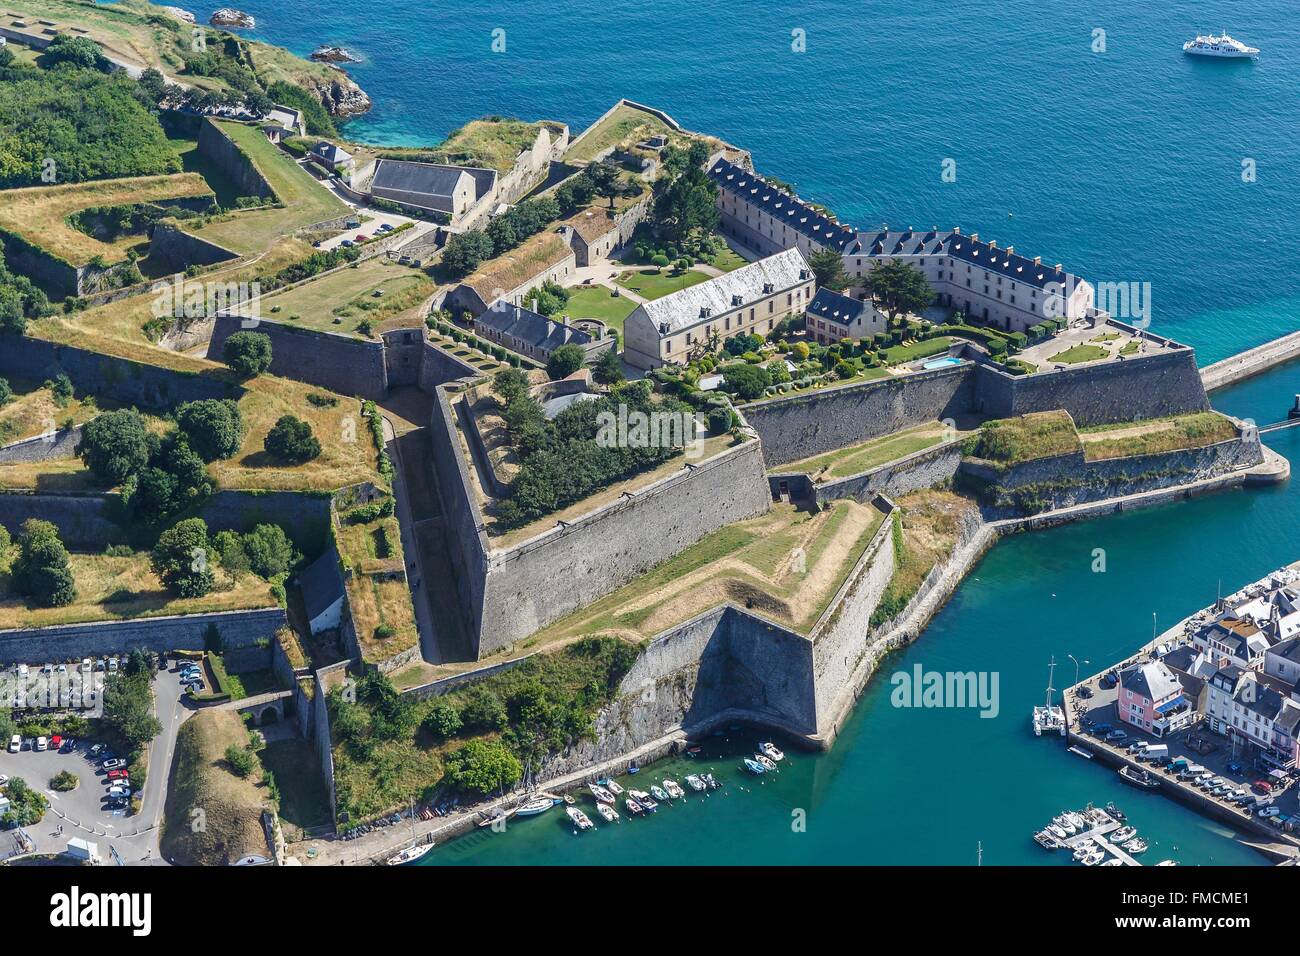 France, Morbihan, Belle Ile, Le Palais, the Citadel (aerial view) Stock Photo